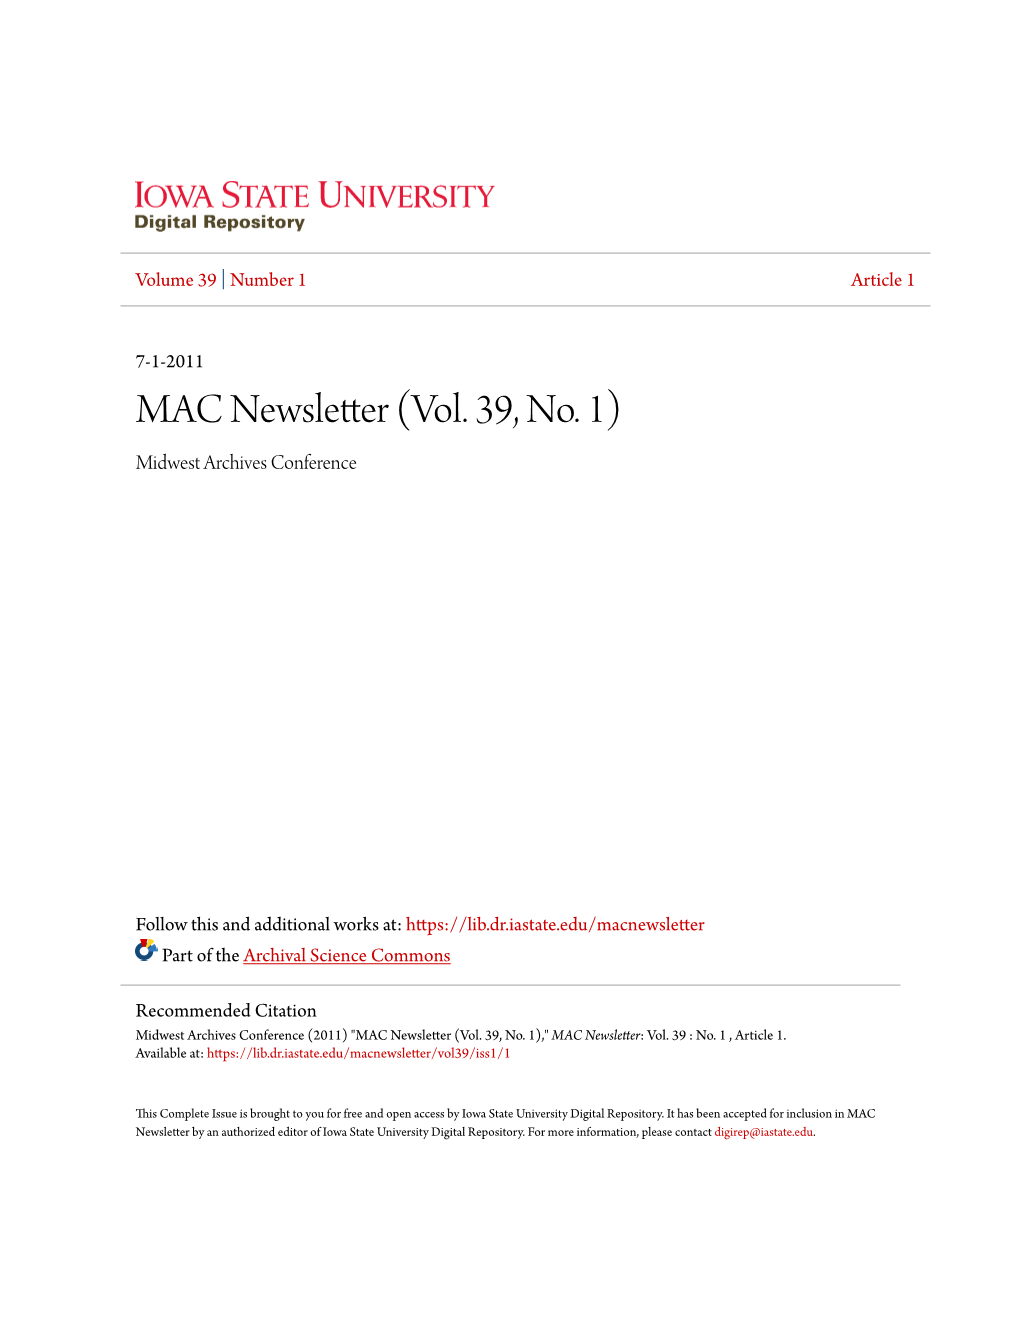 MAC Newsletter (Vol